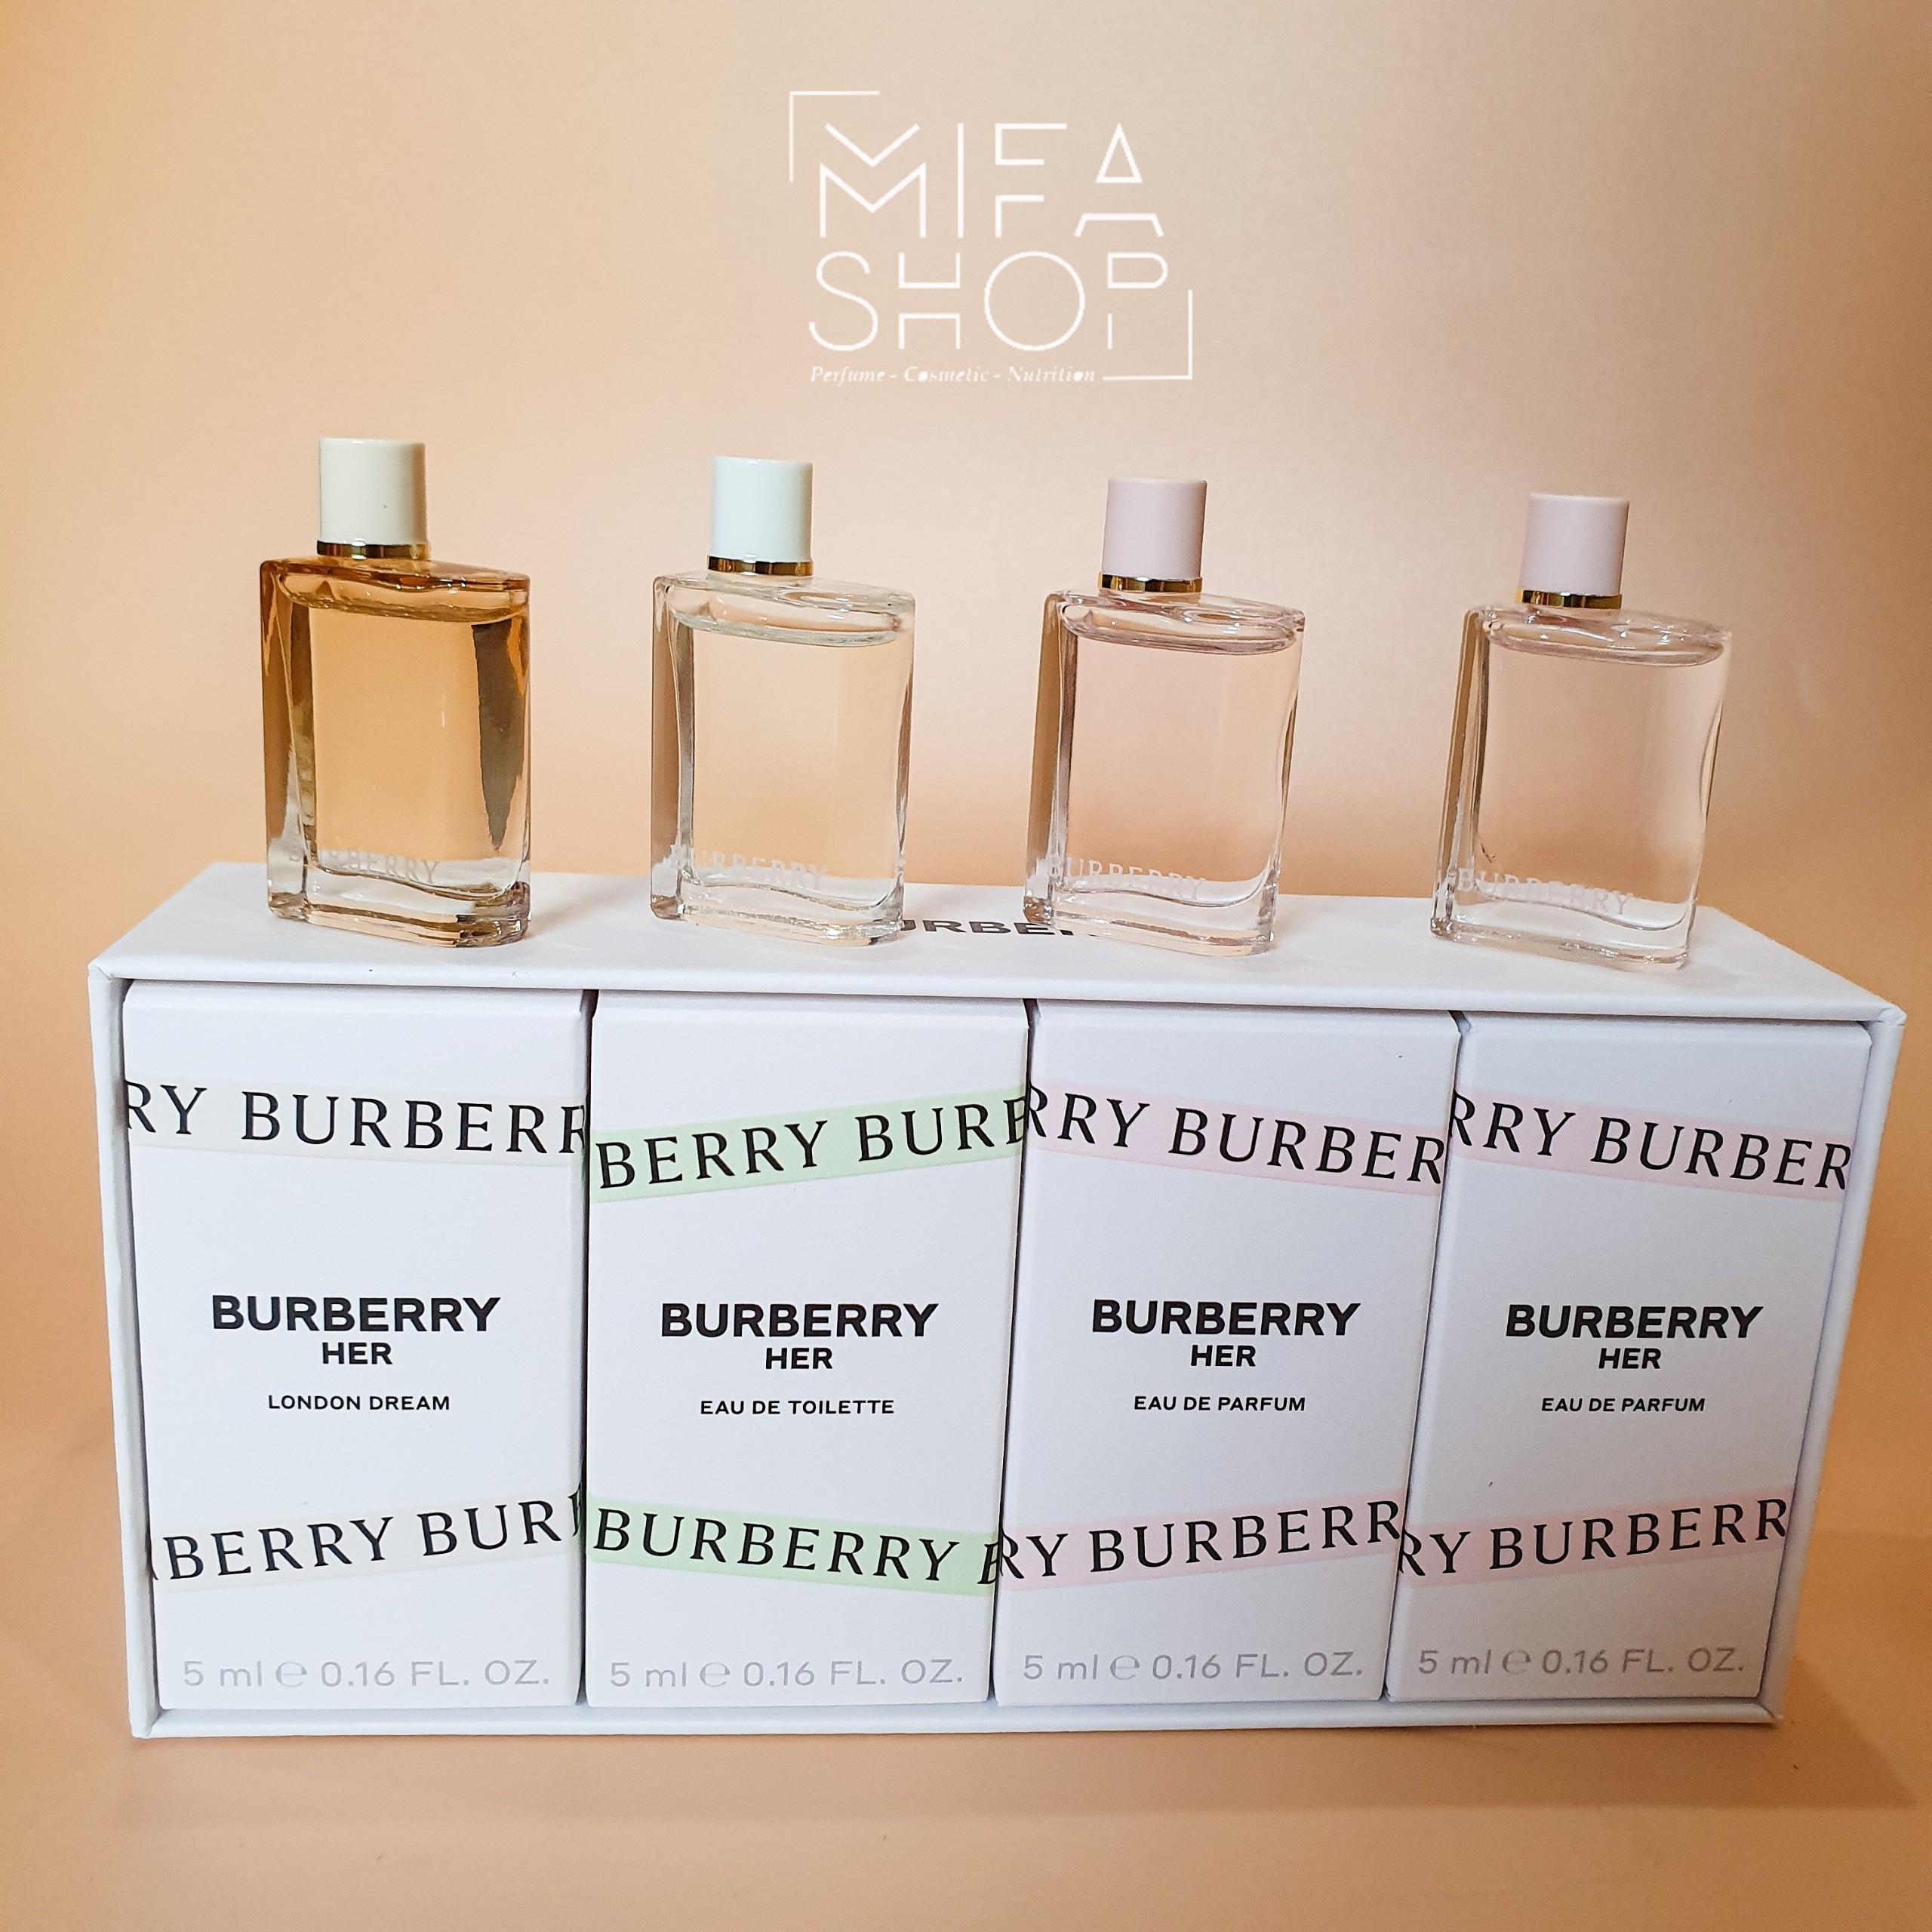 Arriba 71+ imagen burberry her perfume mini - Abzlocal.mx